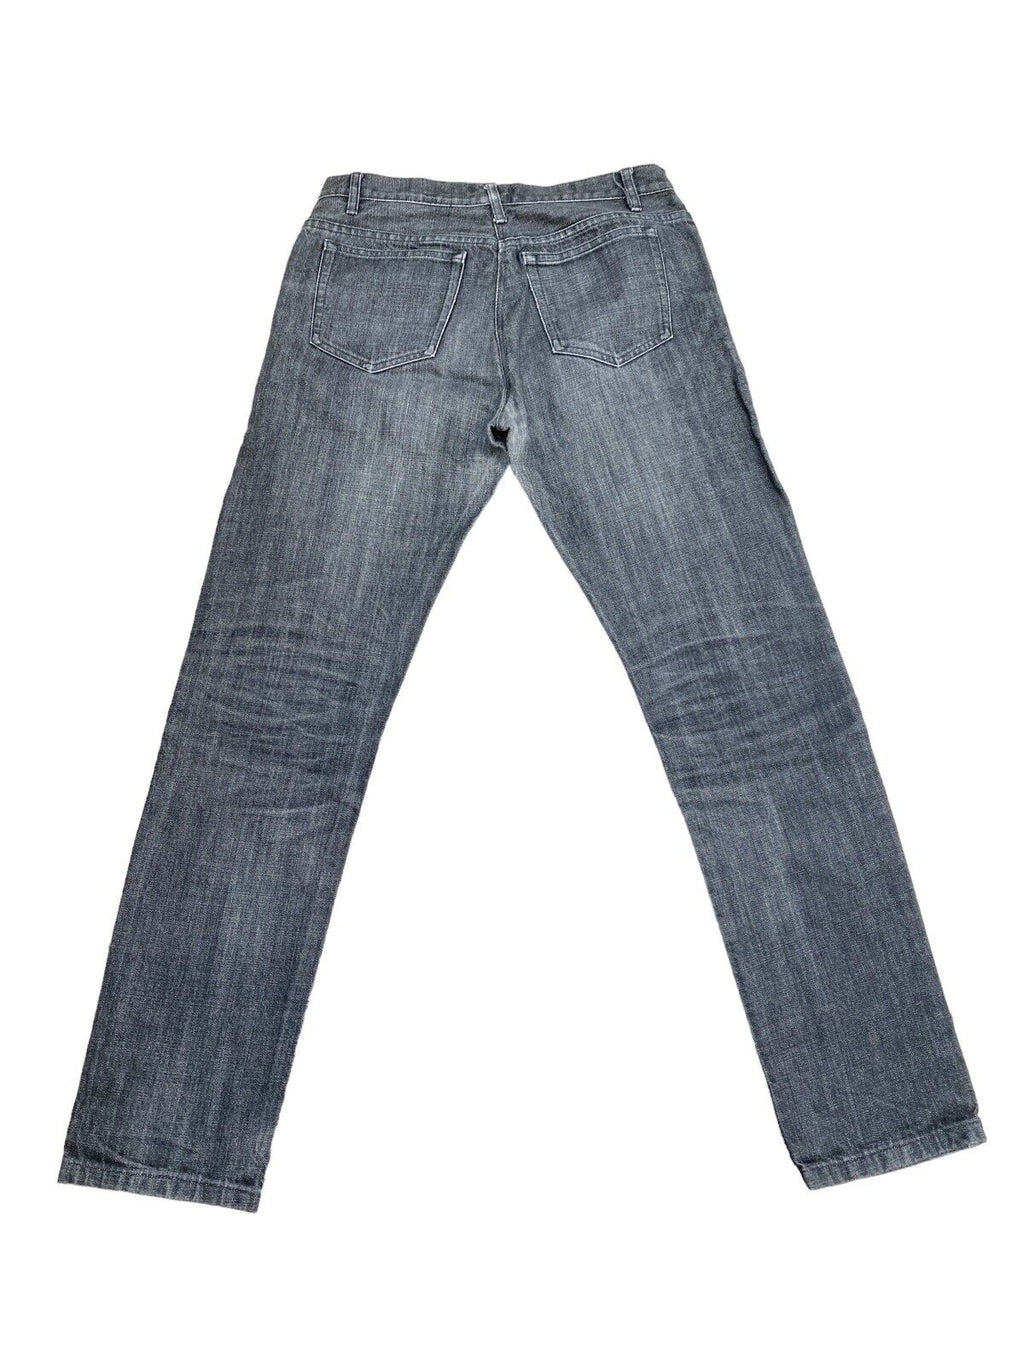 Petit Standard Grey / Black denim Jeans